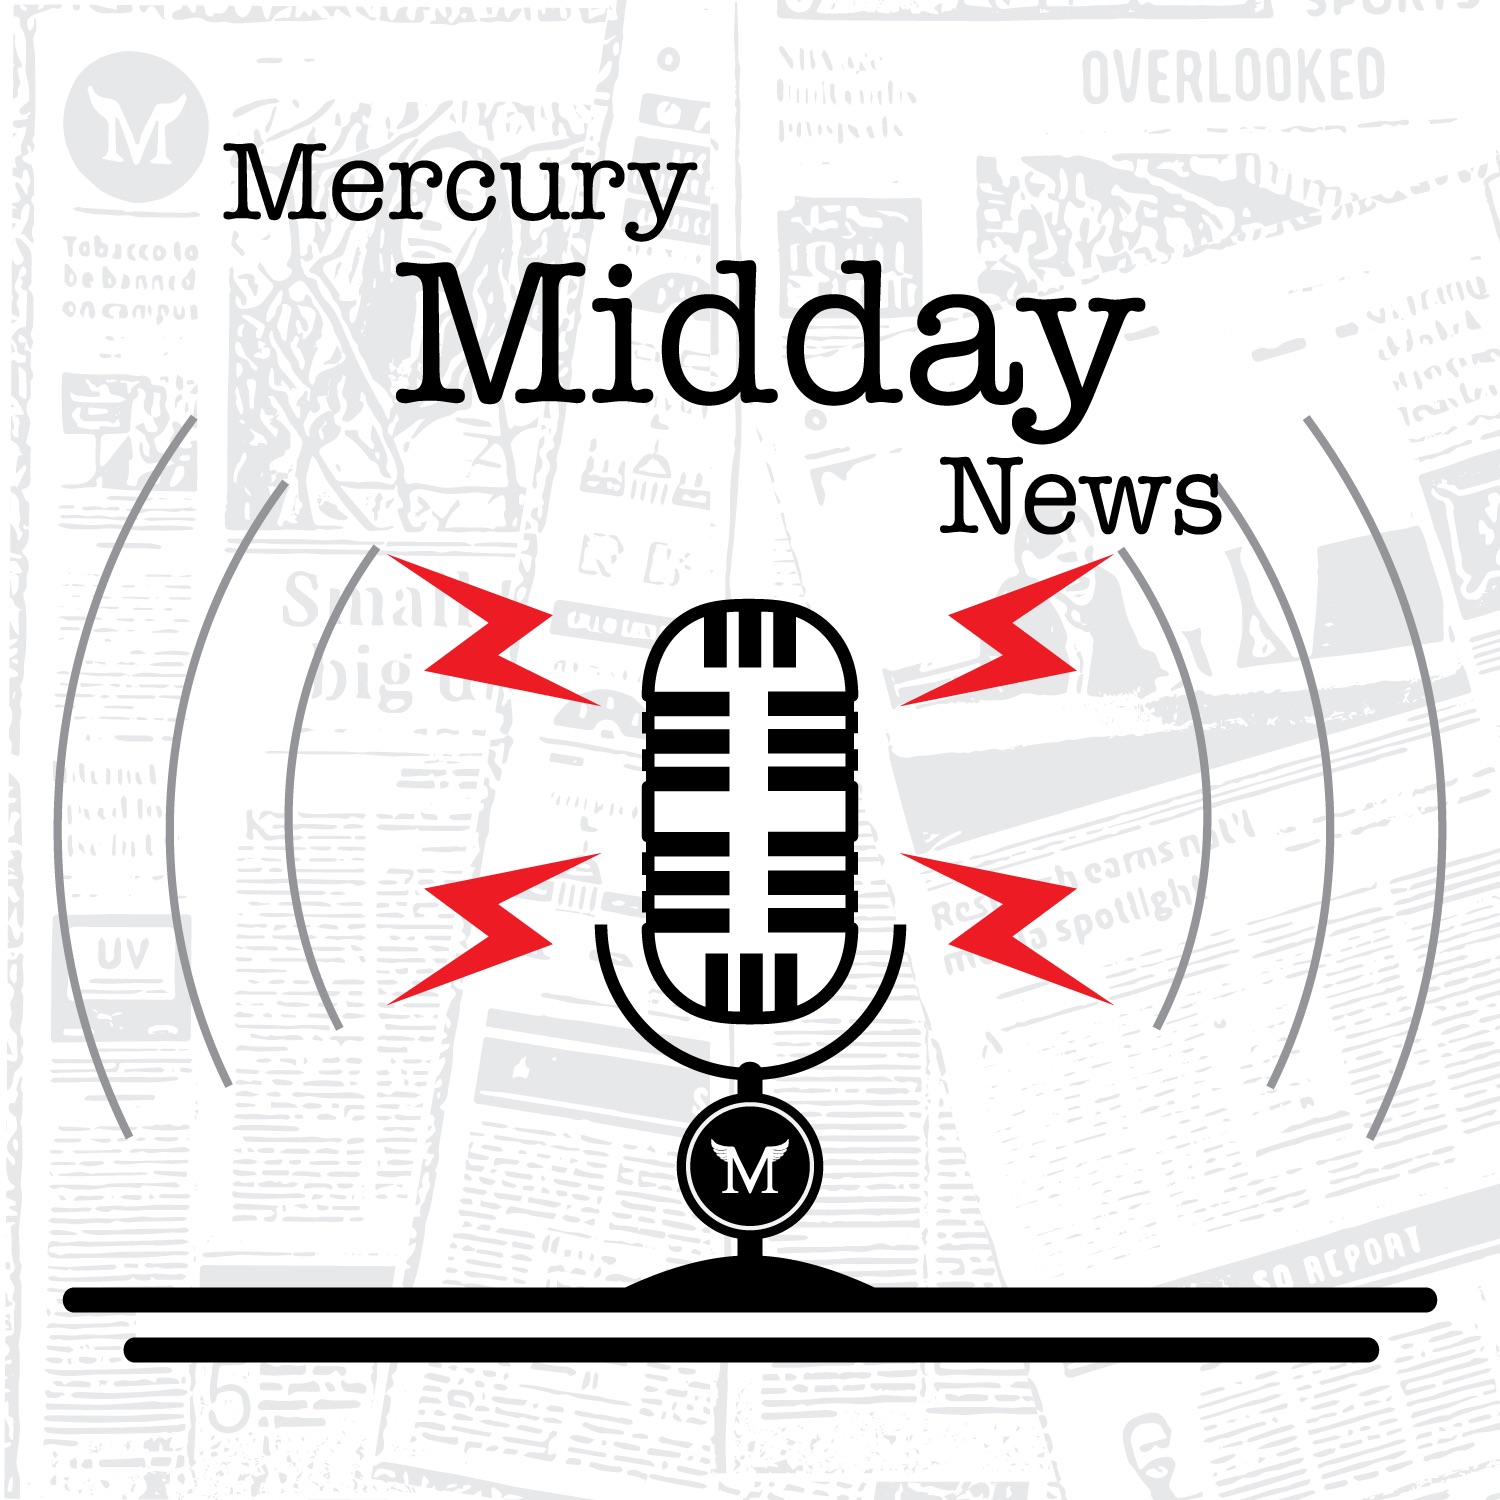 Mercury Midday News 4/6/17